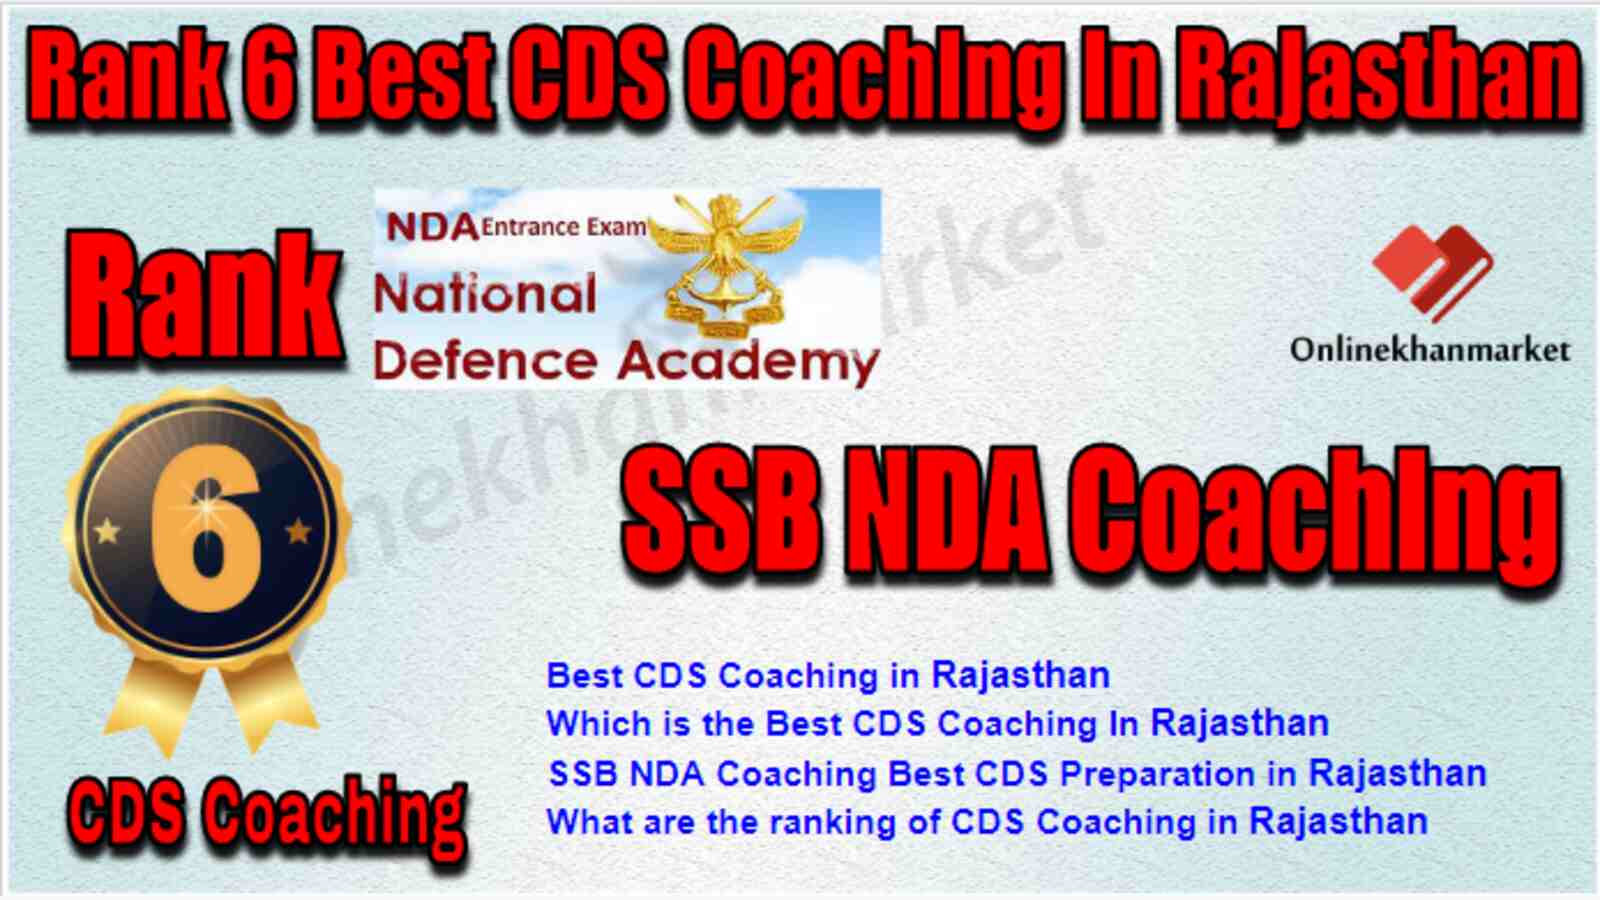 Rank 6 Best CDS Coaching in Rajasthan